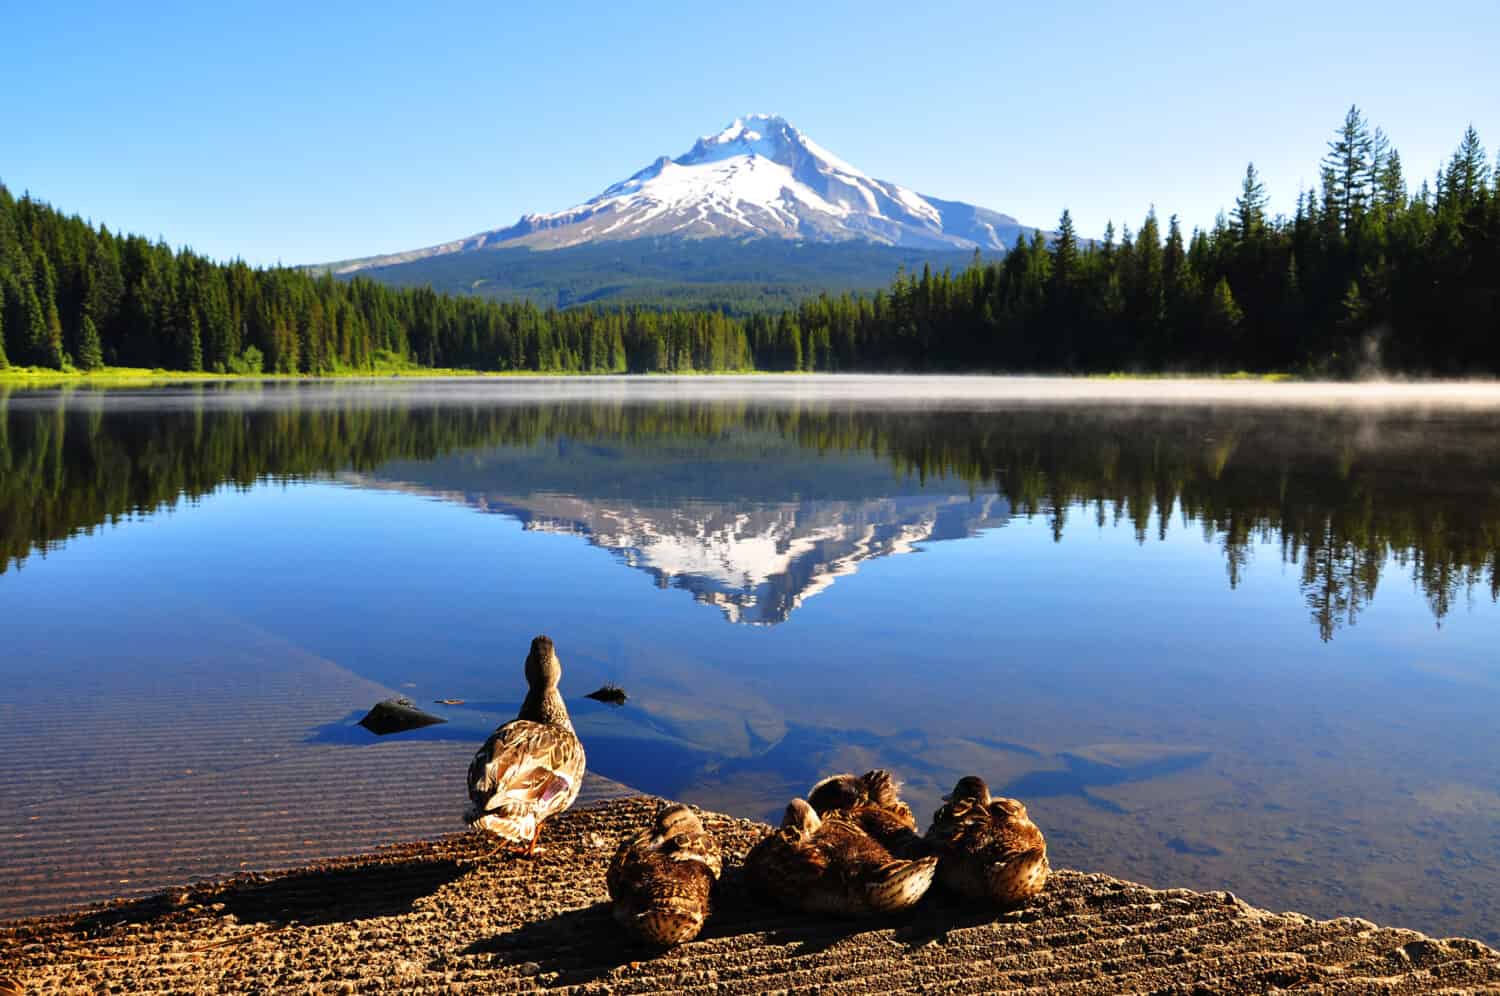 Ducks' family at Trillium Lake, Oregon, U.S.A.